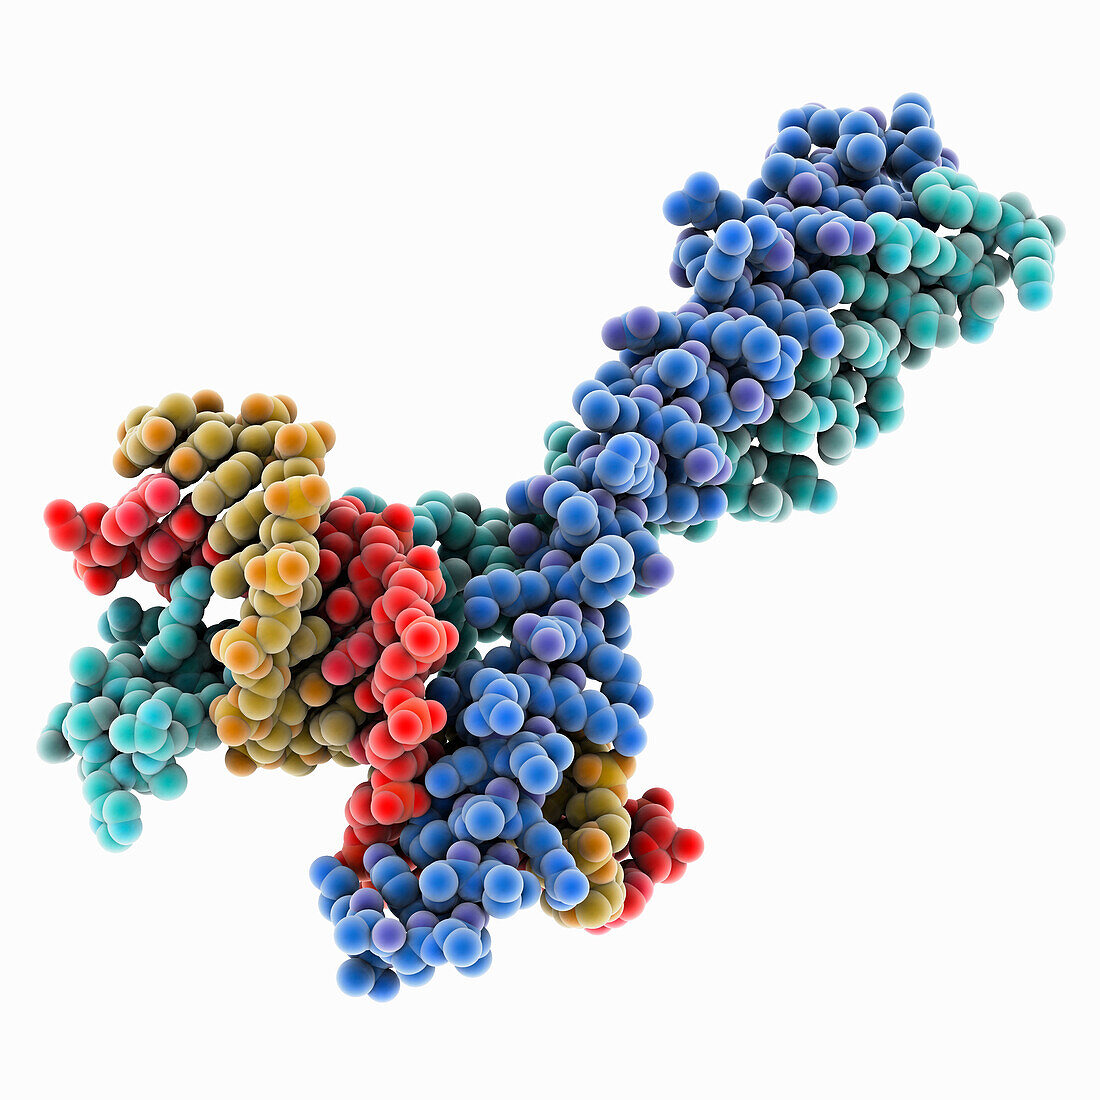 CCAAT-enhancer-binding protein complex, molecular model